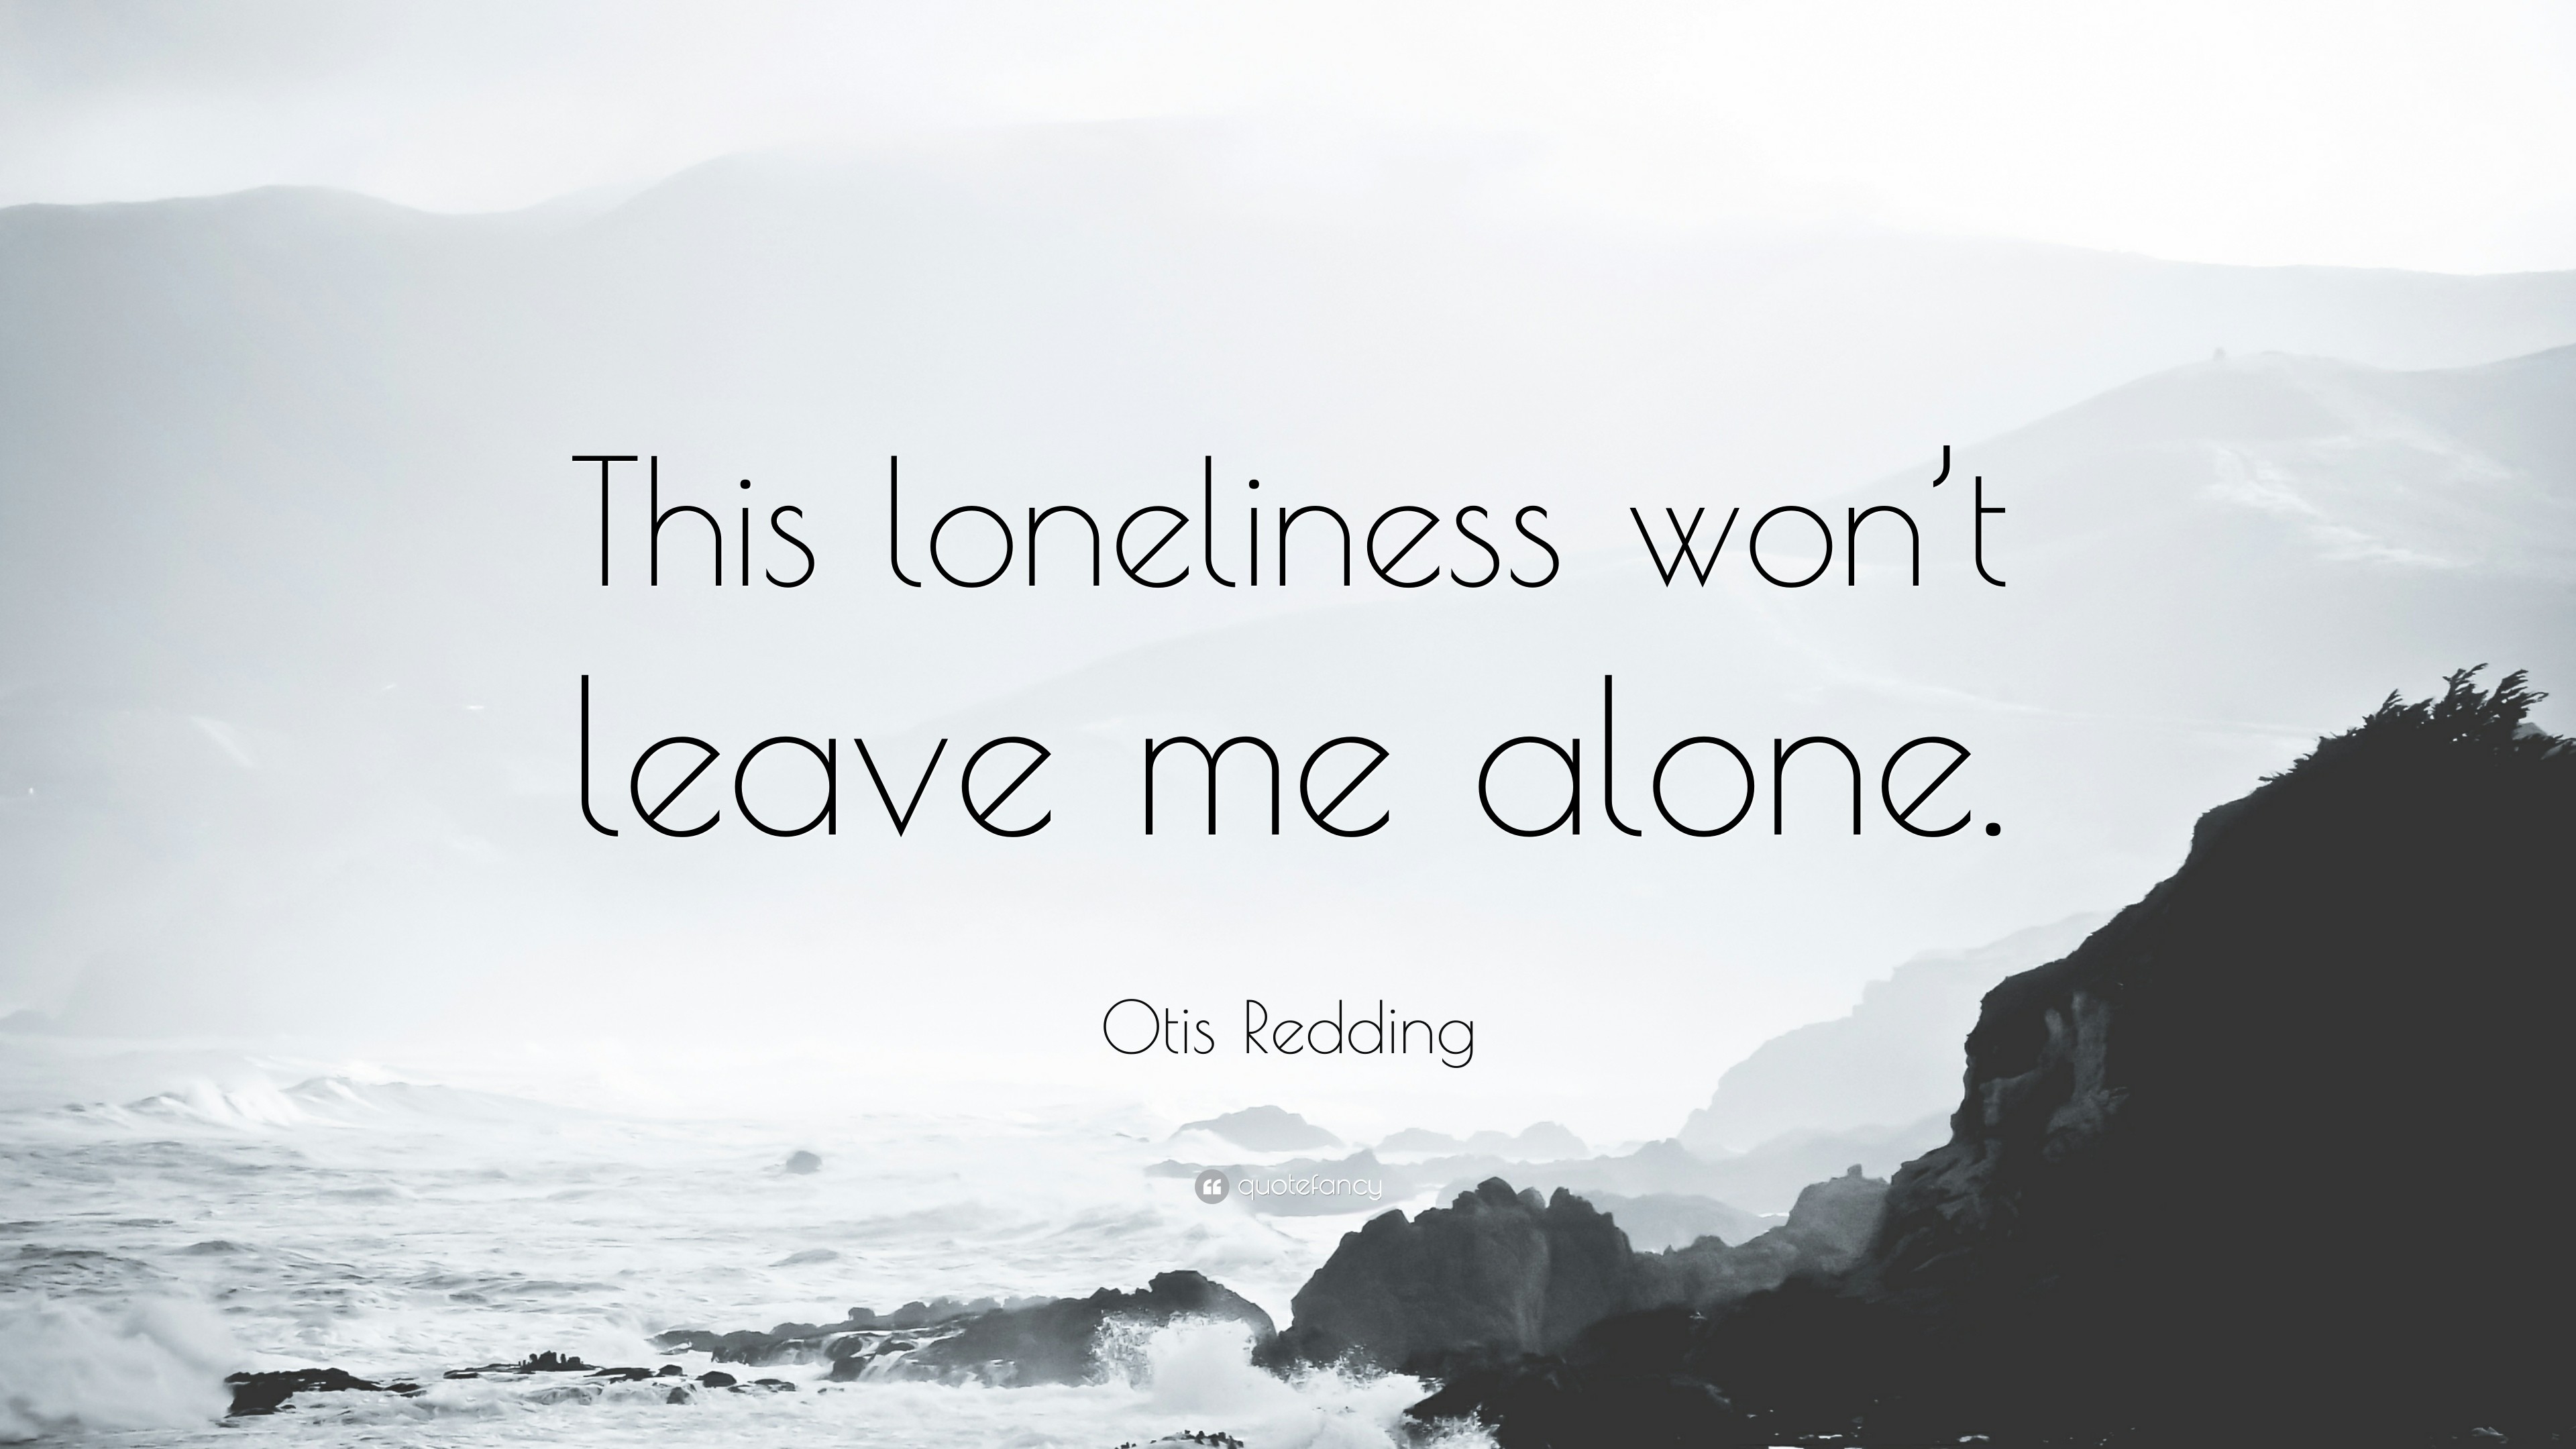 3840x2160 Otis Redding Quote: “This loneliness won't leave me alone.”